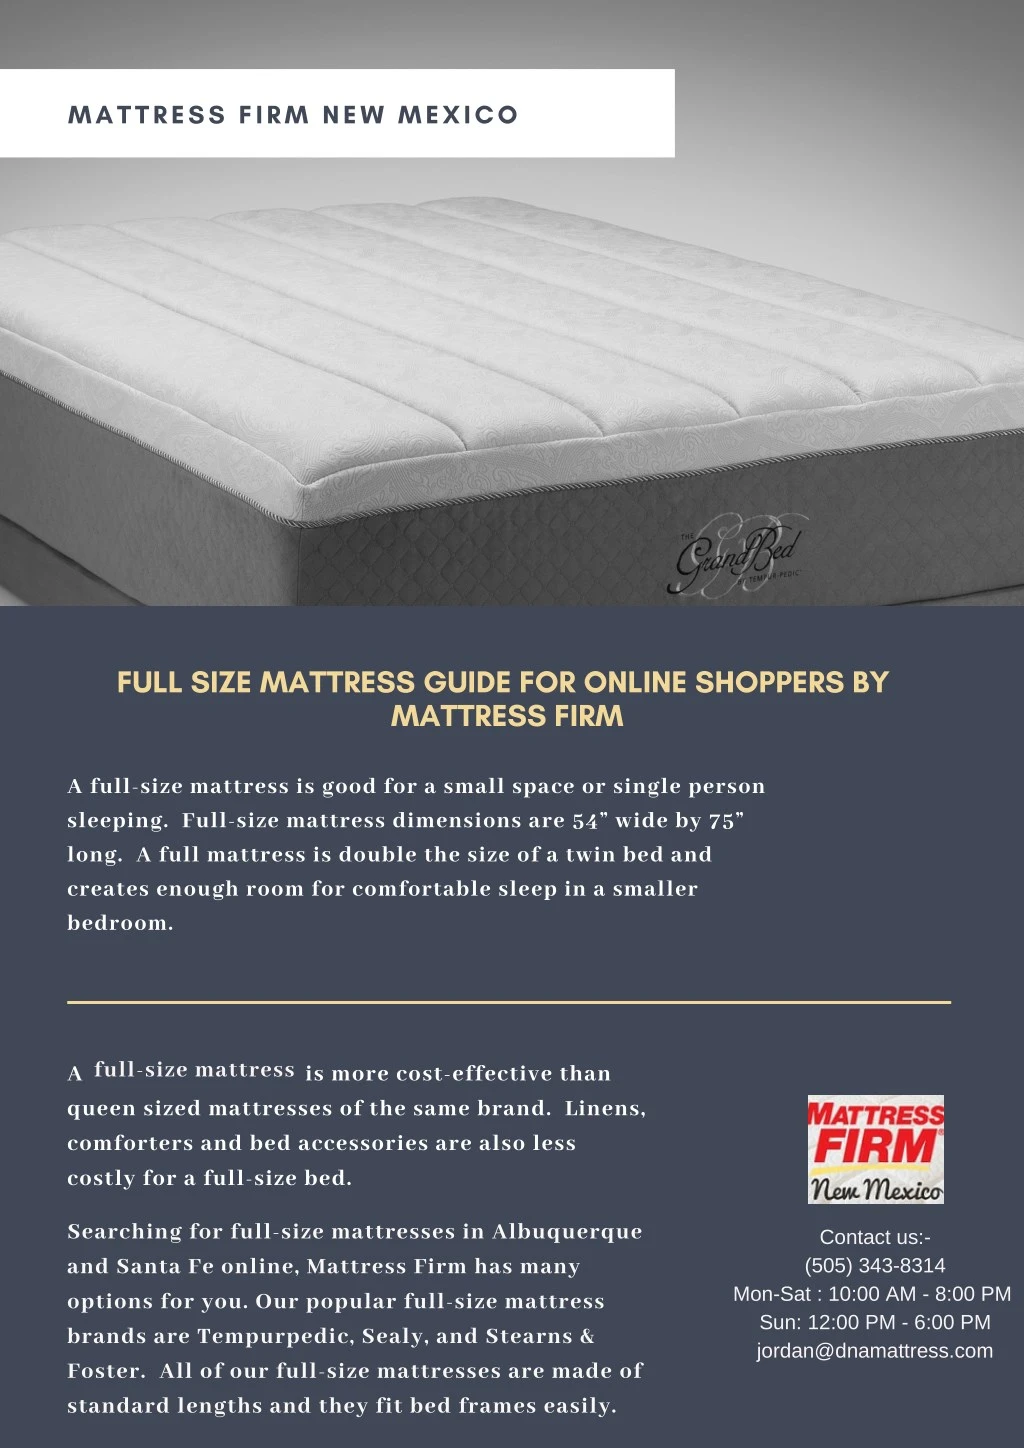 mattress firm new mexico